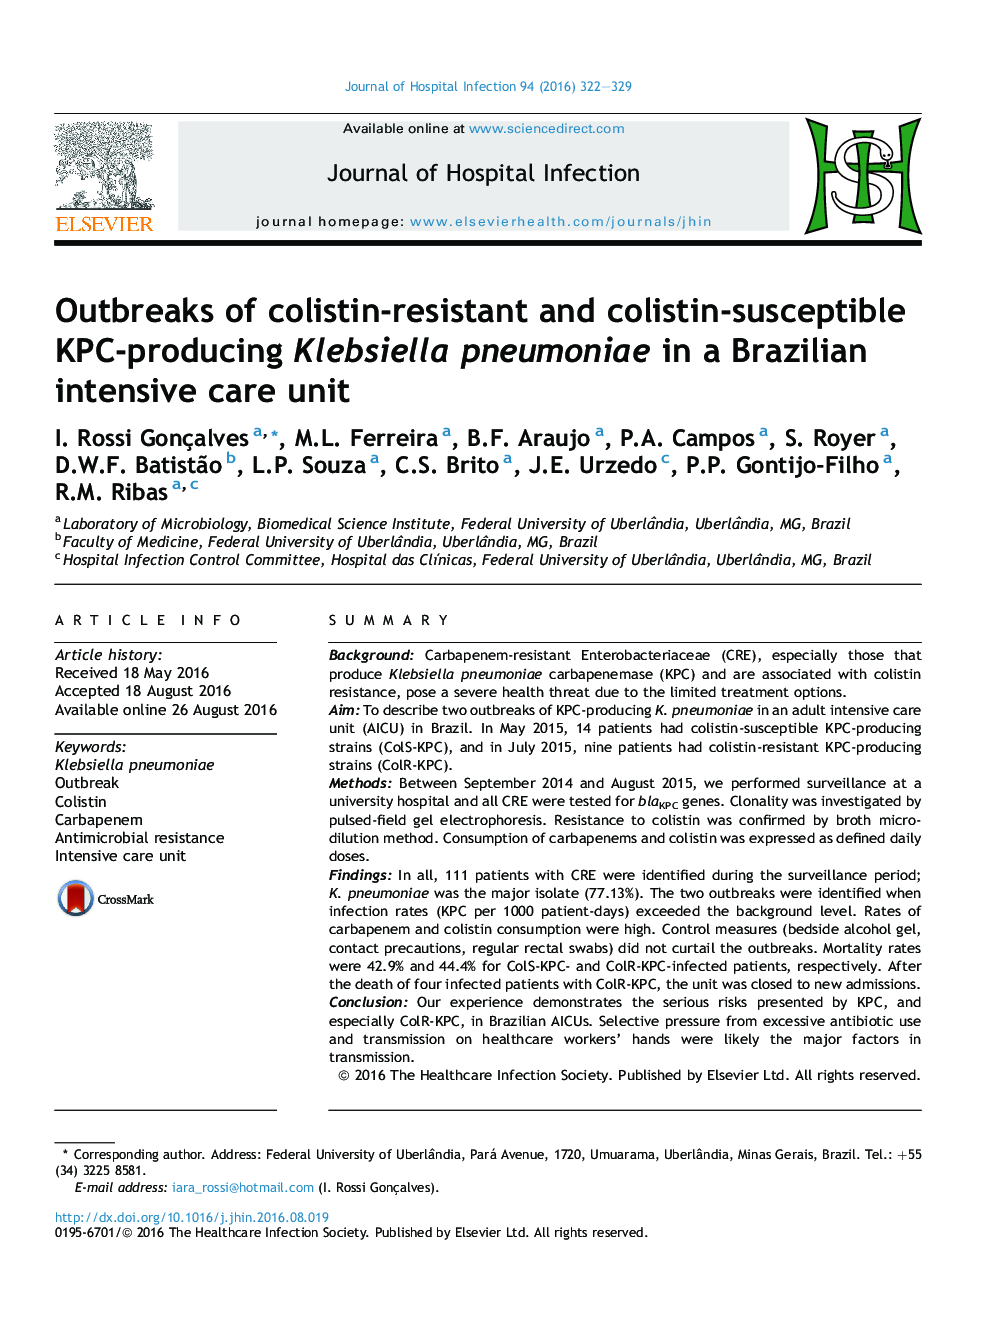 Outbreaks of colistin-resistant and colistin-susceptible KPC-producing Klebsiella pneumoniae in a Brazilian intensive care unit